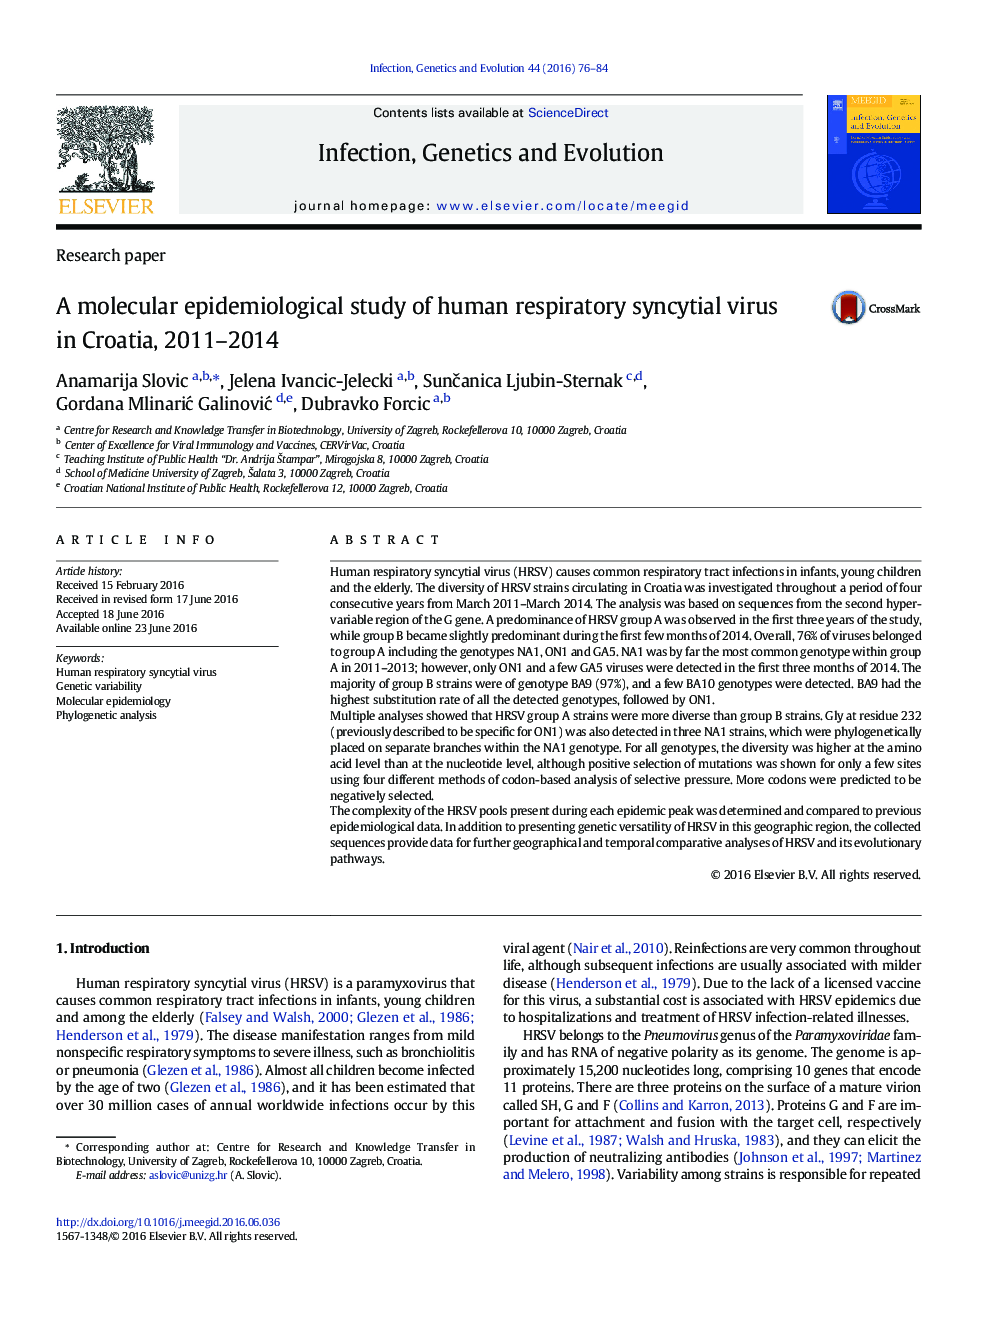 A molecular epidemiological study of human respiratory syncytial virus in Croatia, 2011-2014